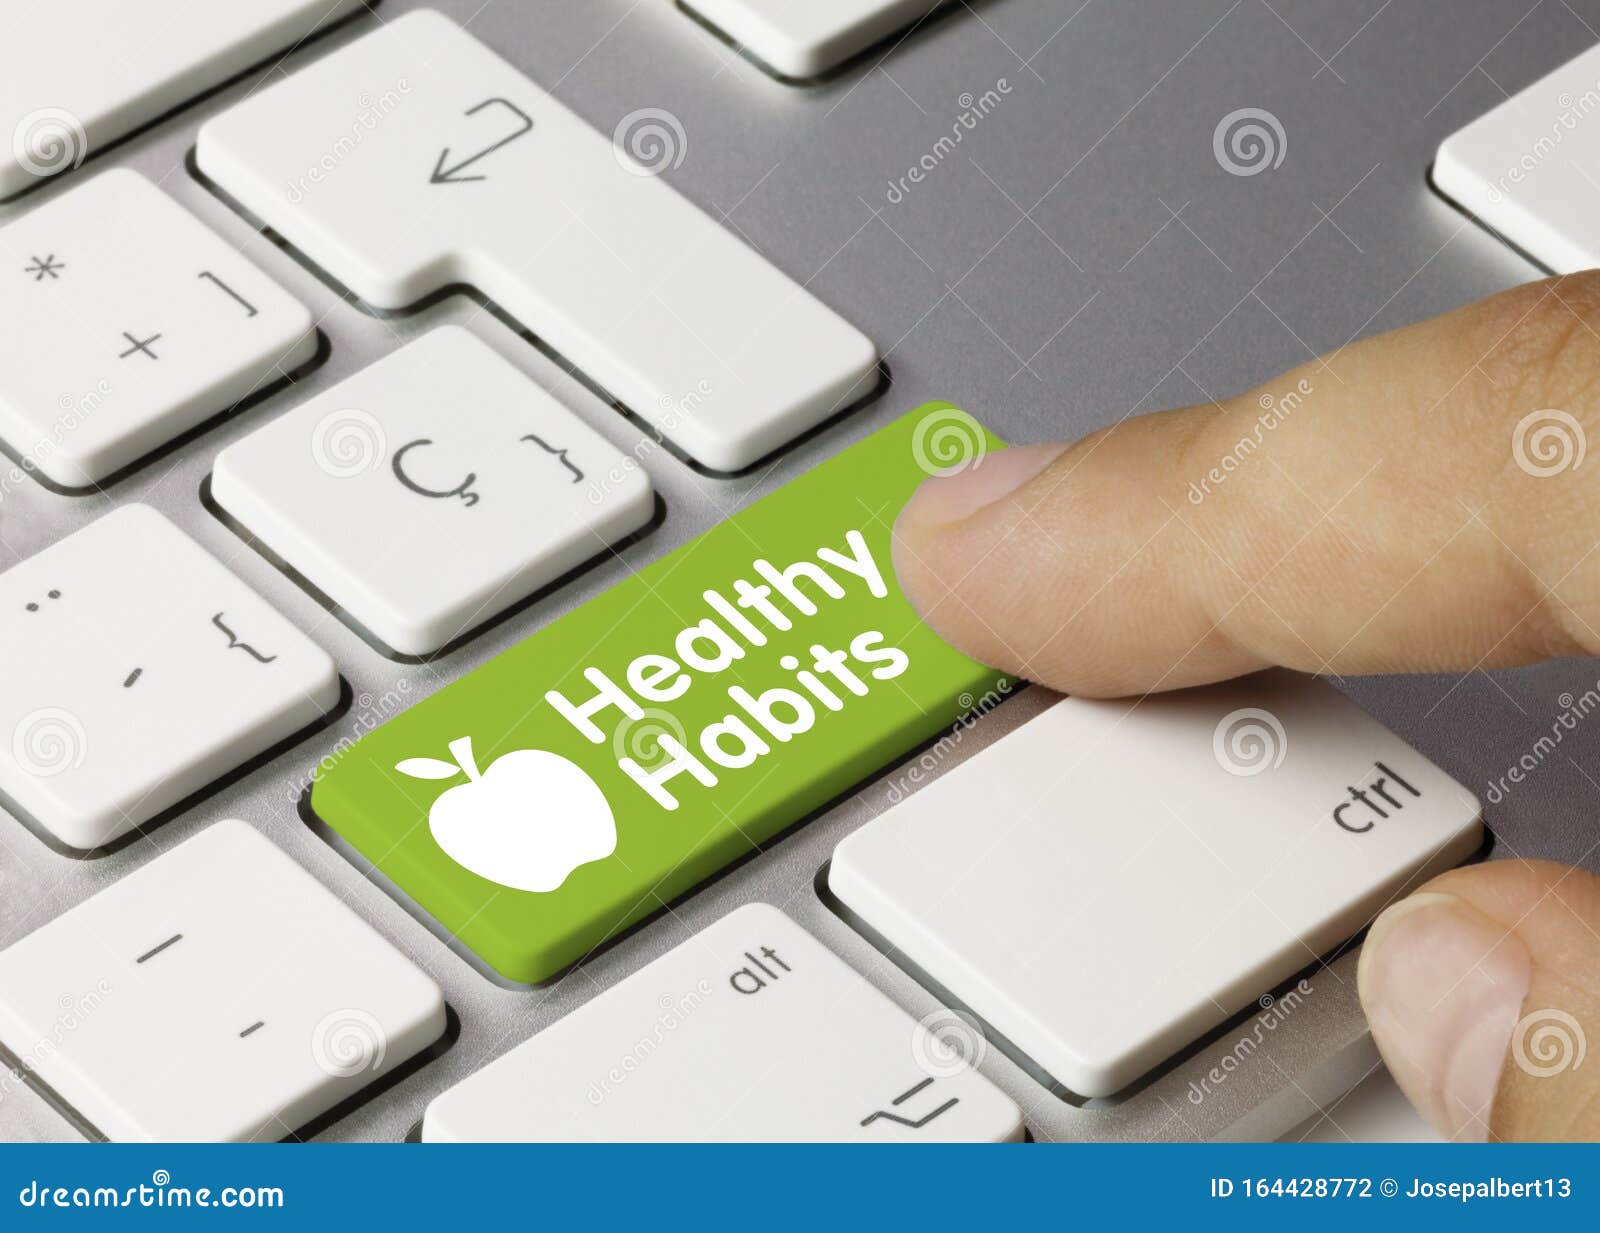 healthy habits - inscription on green keyboard key